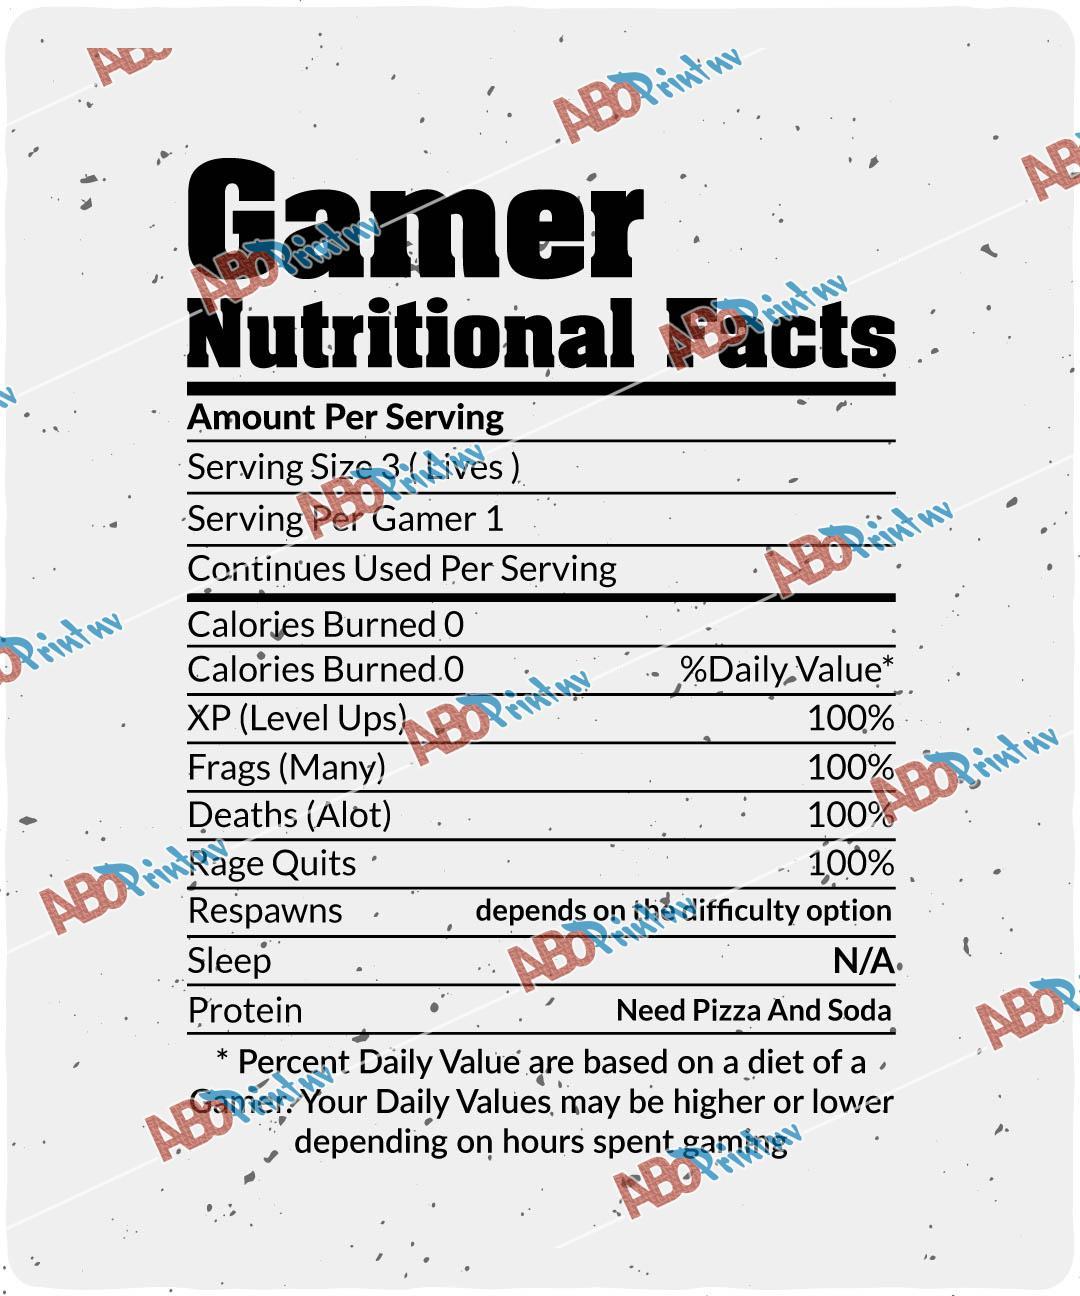 Gamer Nutritional Facts.jpg